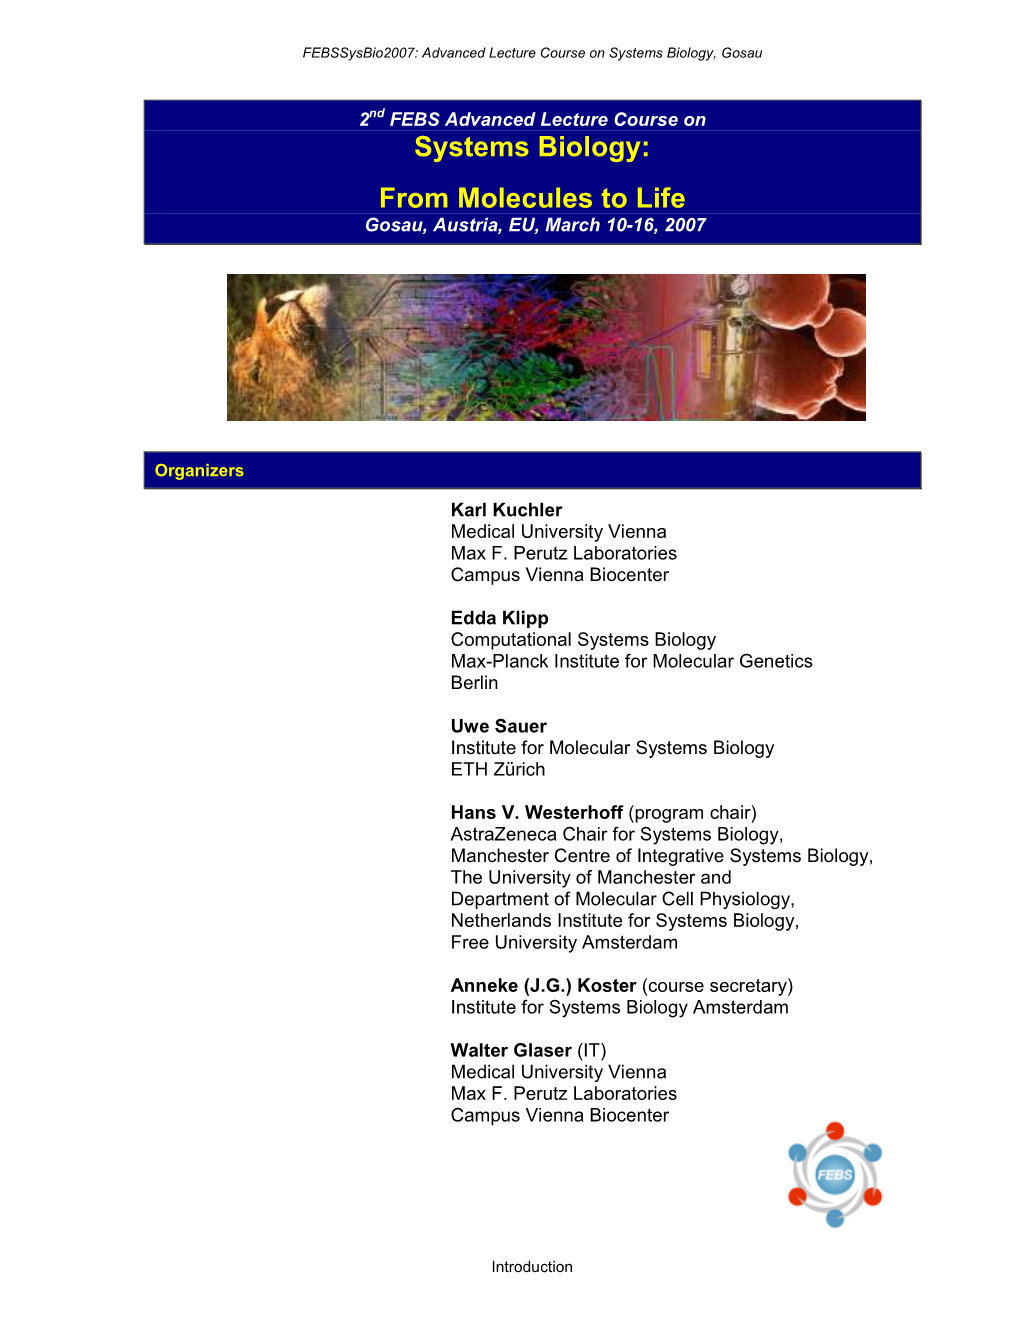 Systems Biology: from Molecules to Life Gosau, Austria, EU, March 10-16, 2007